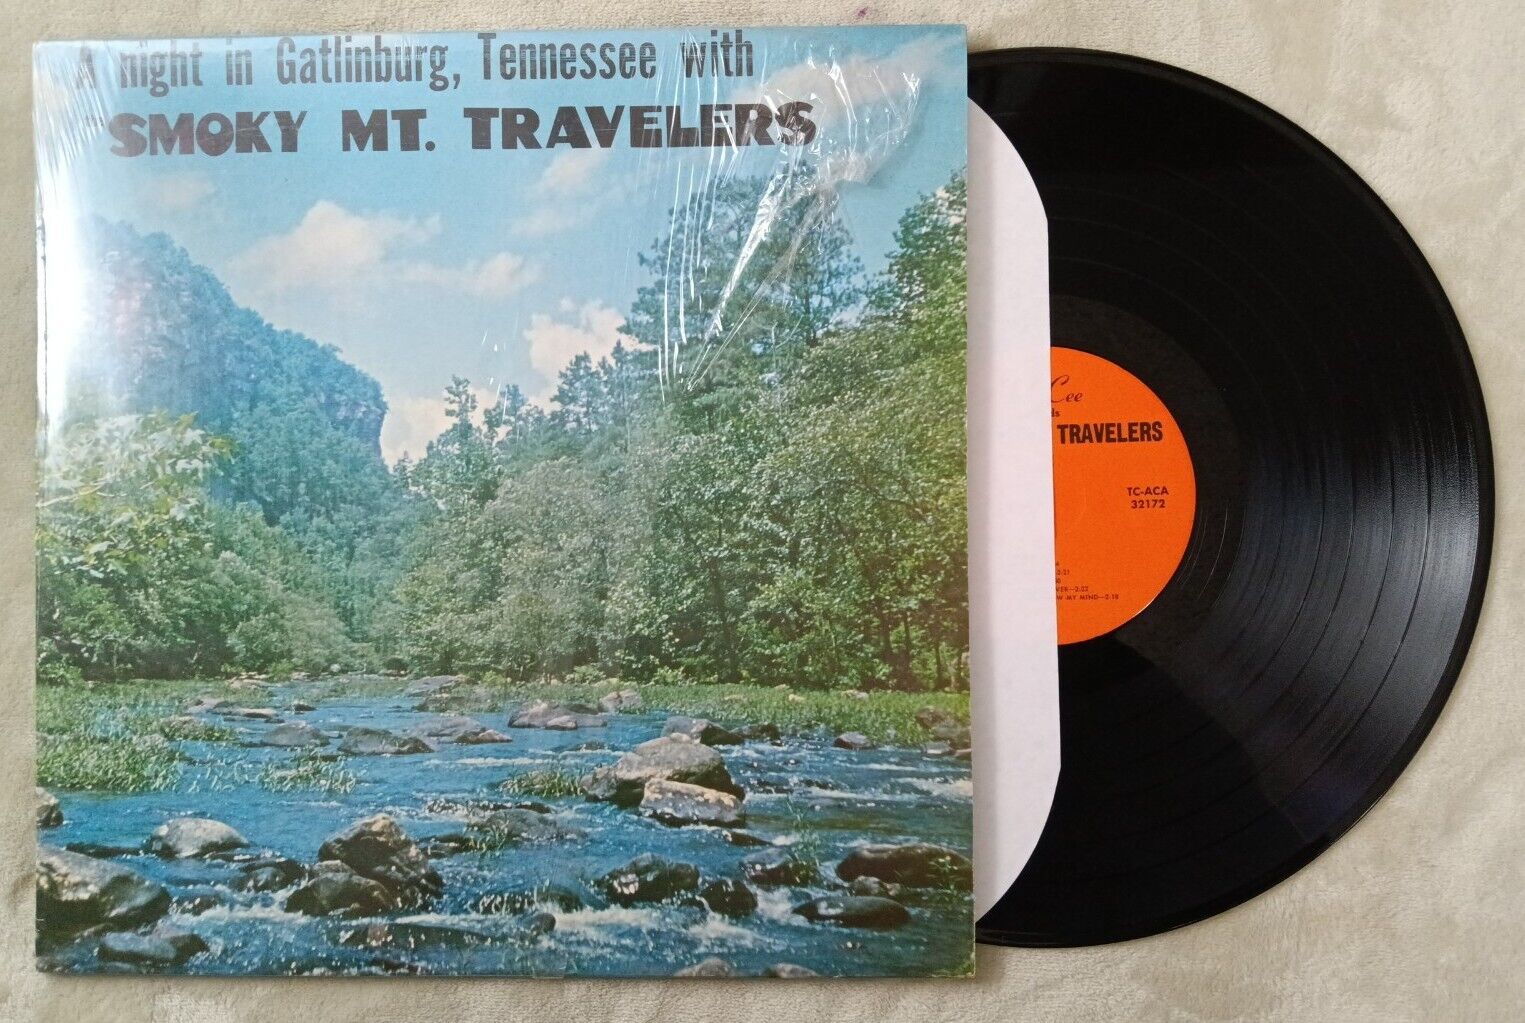 Smokey MT. travelers a Night in Gatlinburg Tennessee LP record VG+-VG++ Tee Cee